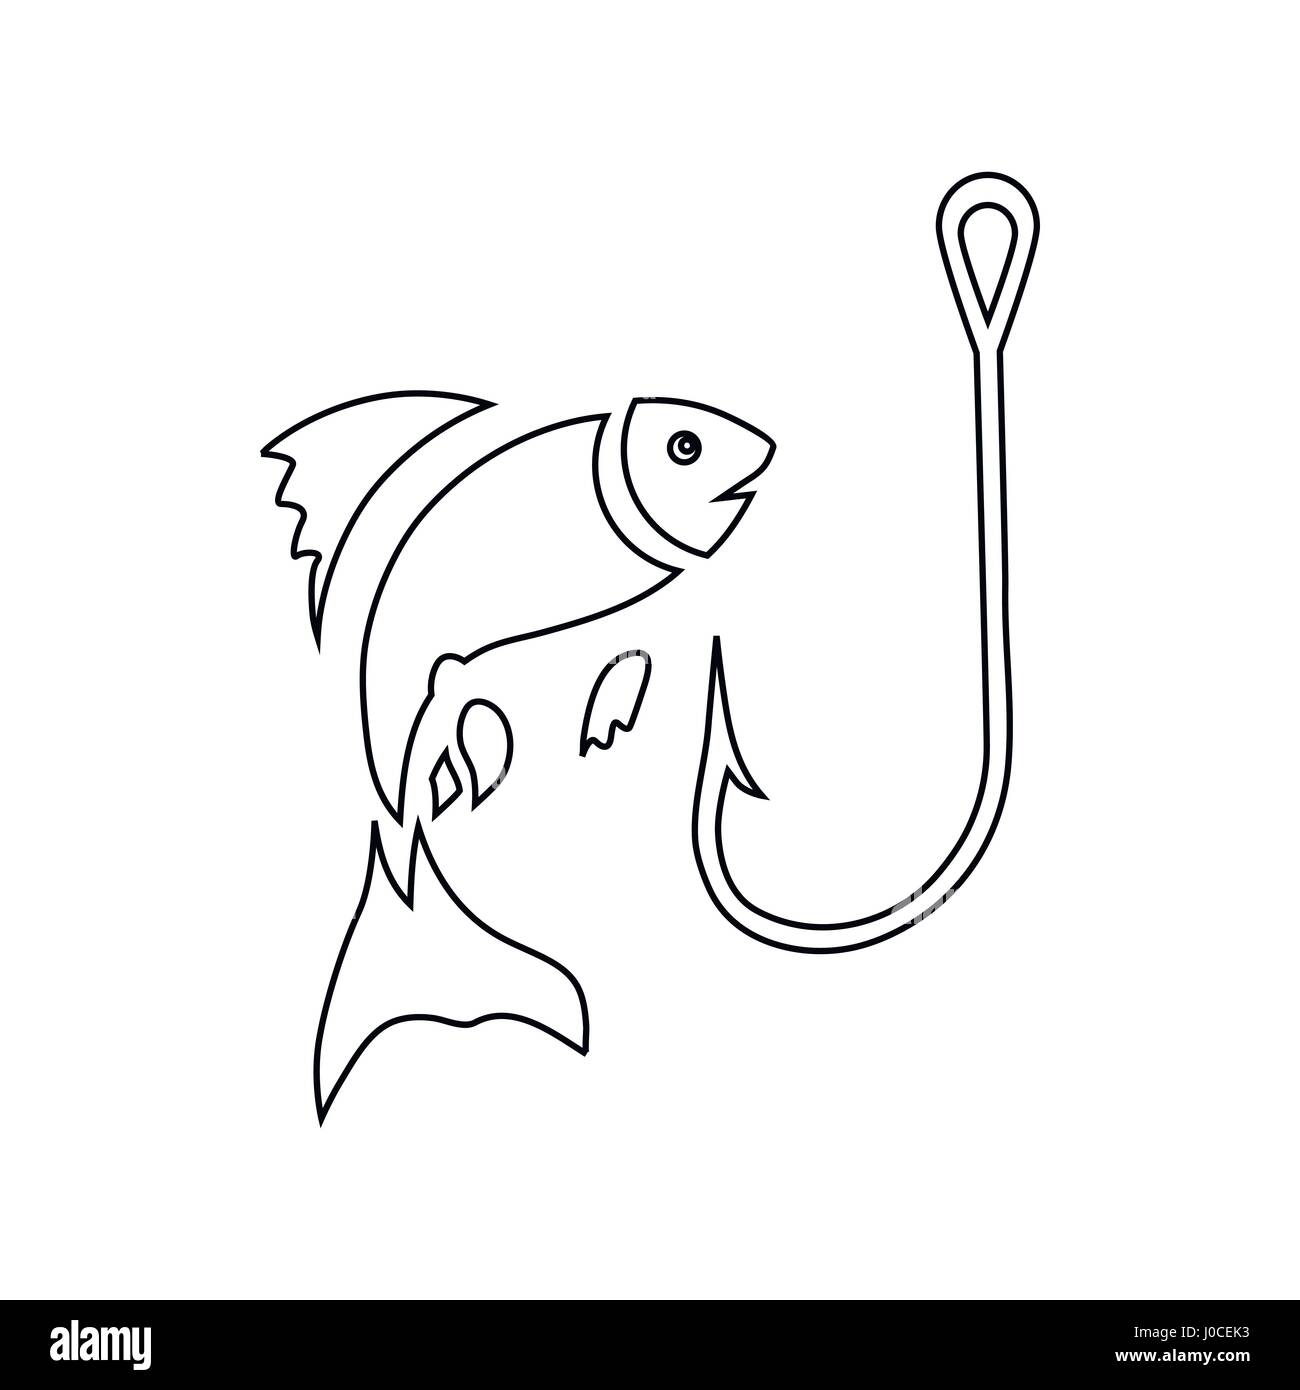 https://c8.alamy.com/comp/J0CEK3/fishing-hook-and-fish-icon-outline-style-J0CEK3.jpg